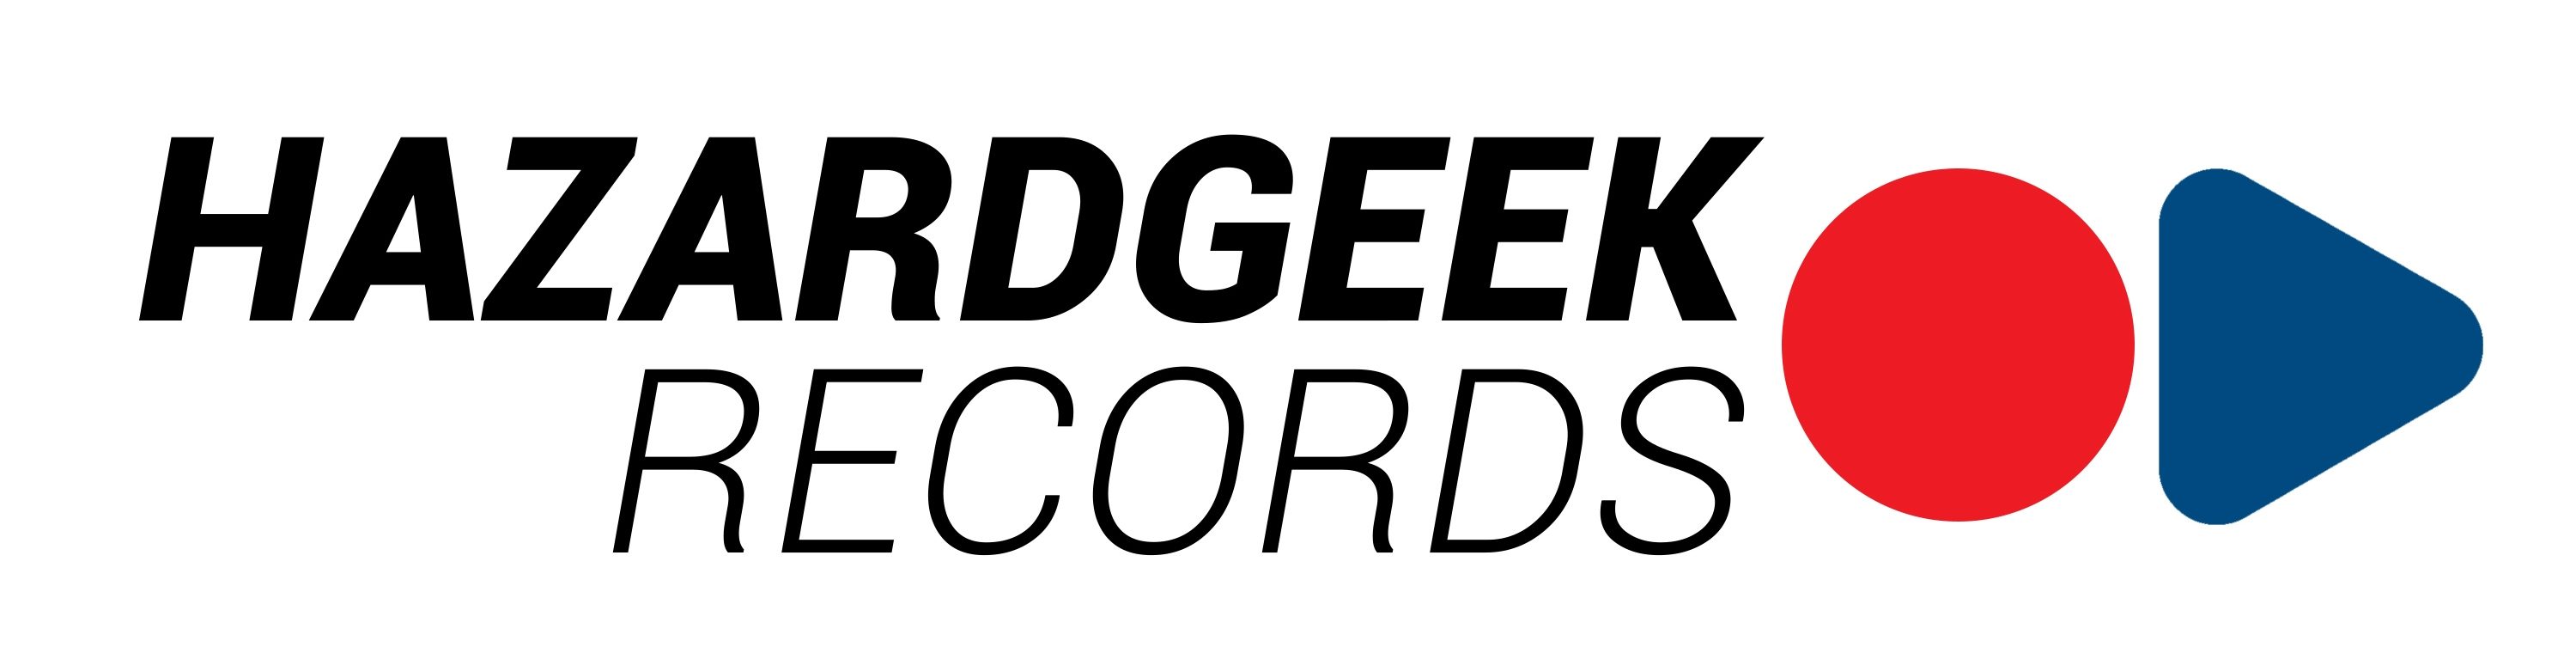 Hazardgeek Records